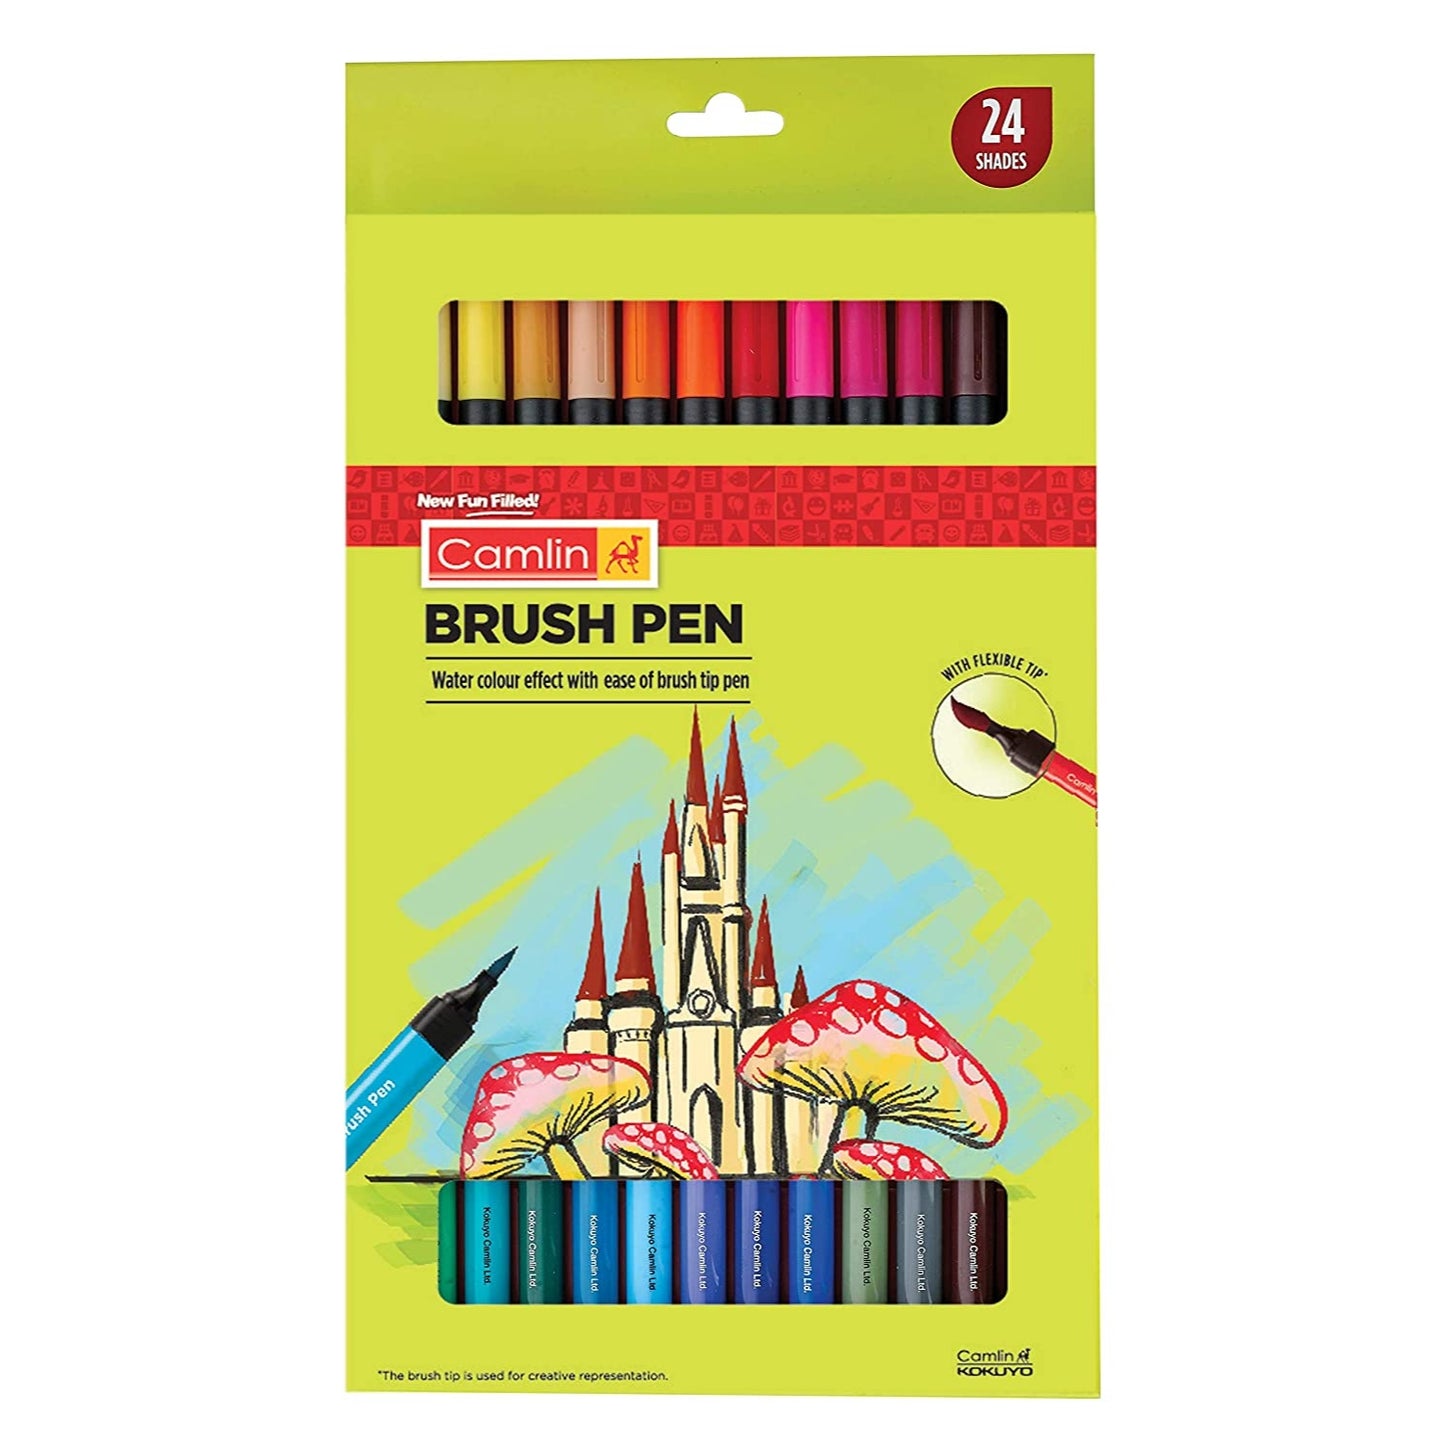 Camel Brush pen 24 shades